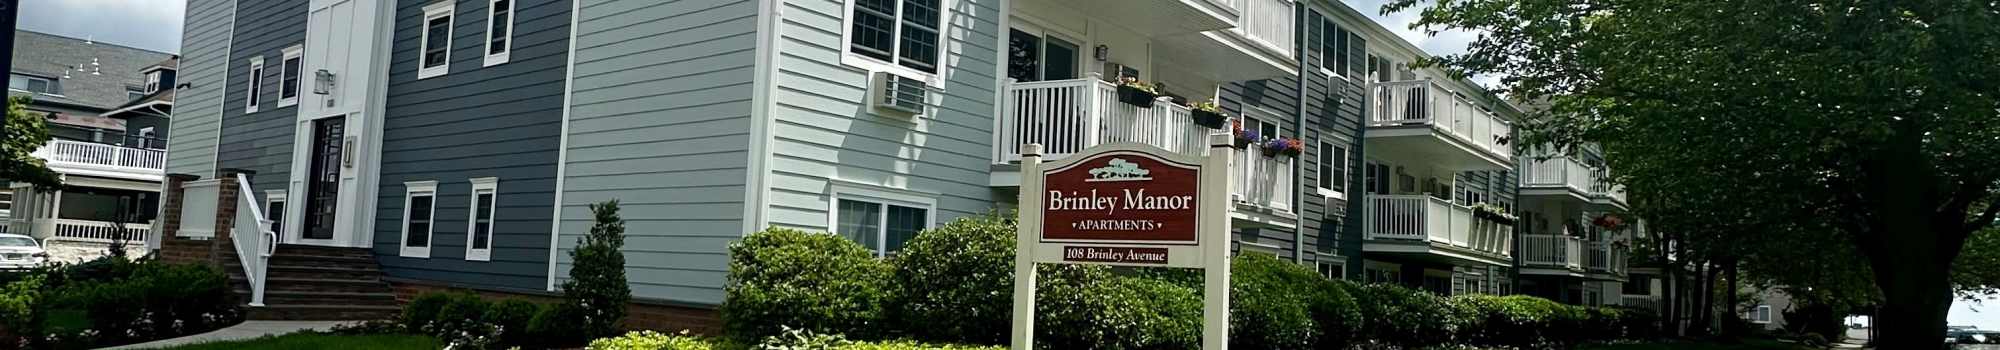 Photos of Brinley Manor in Bradley Beach, New Jersey